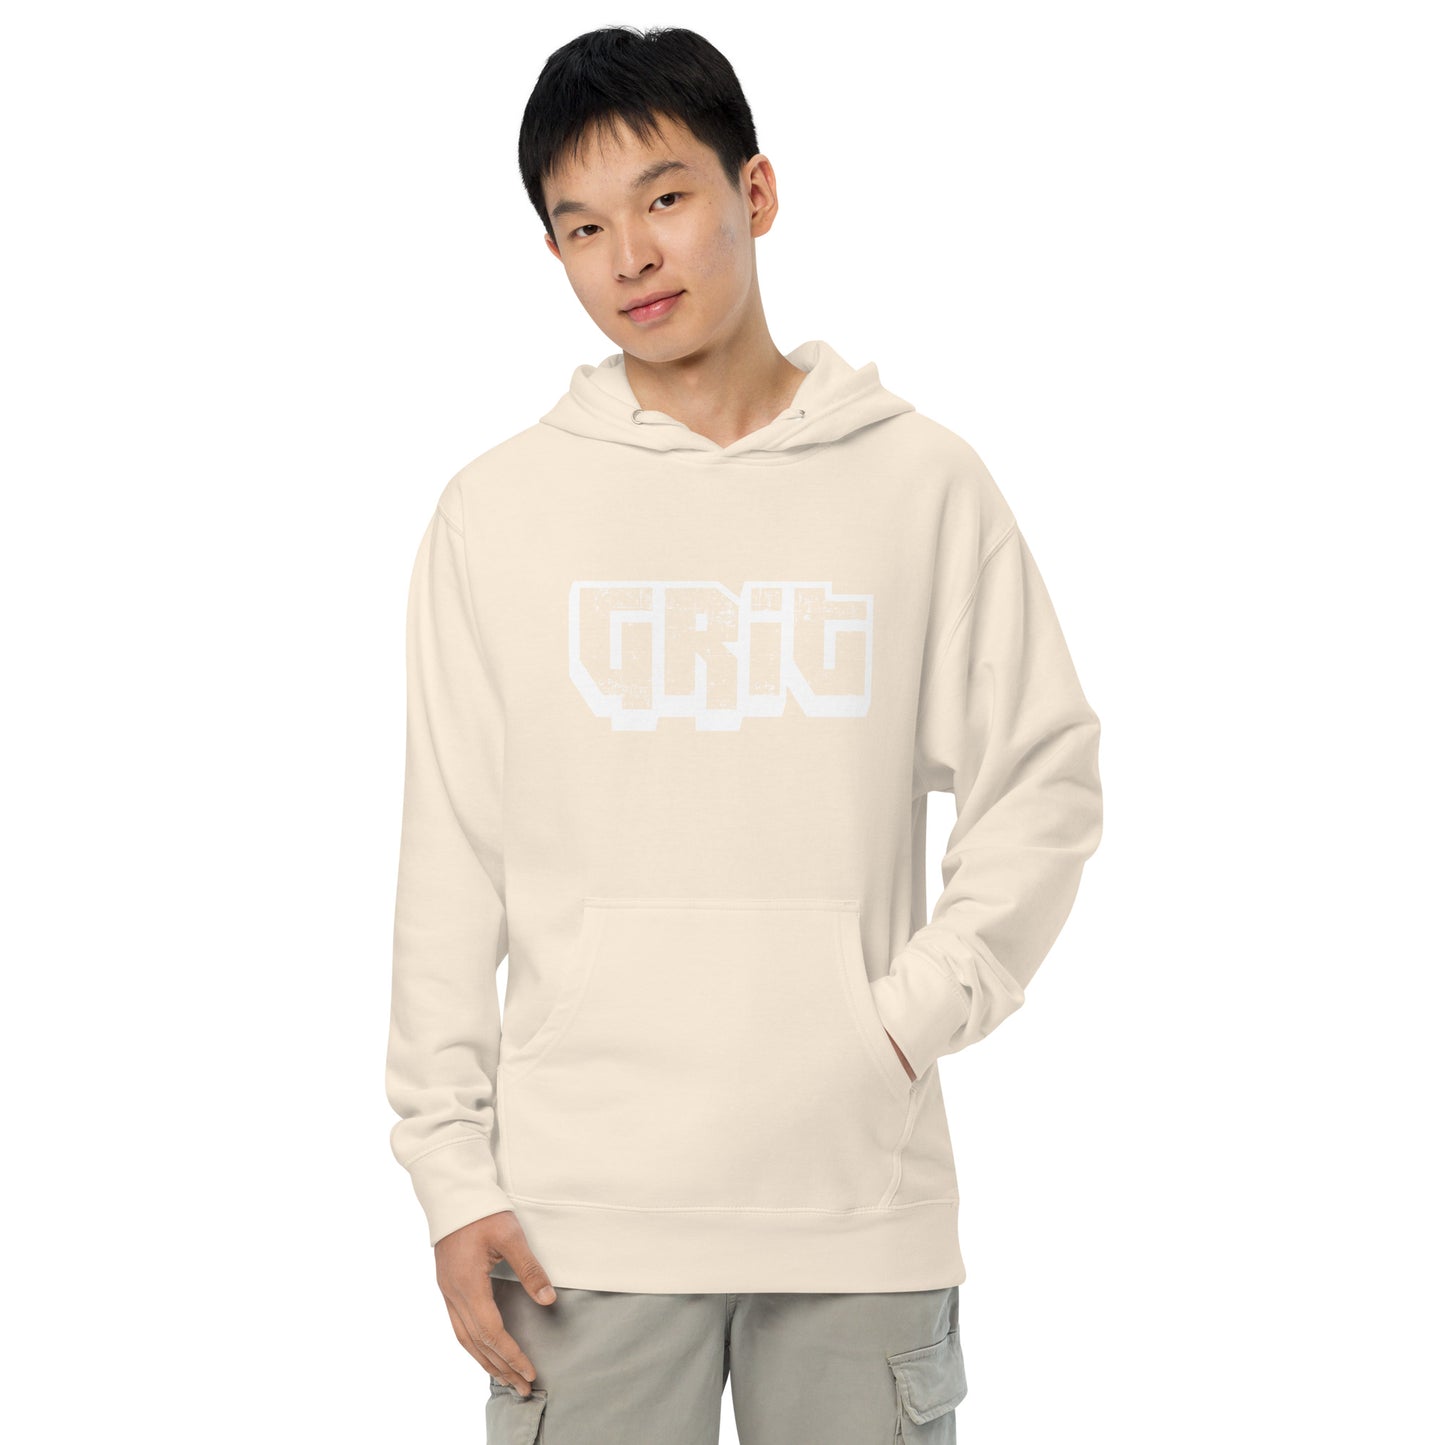 Grit Unisex midweight hoodie